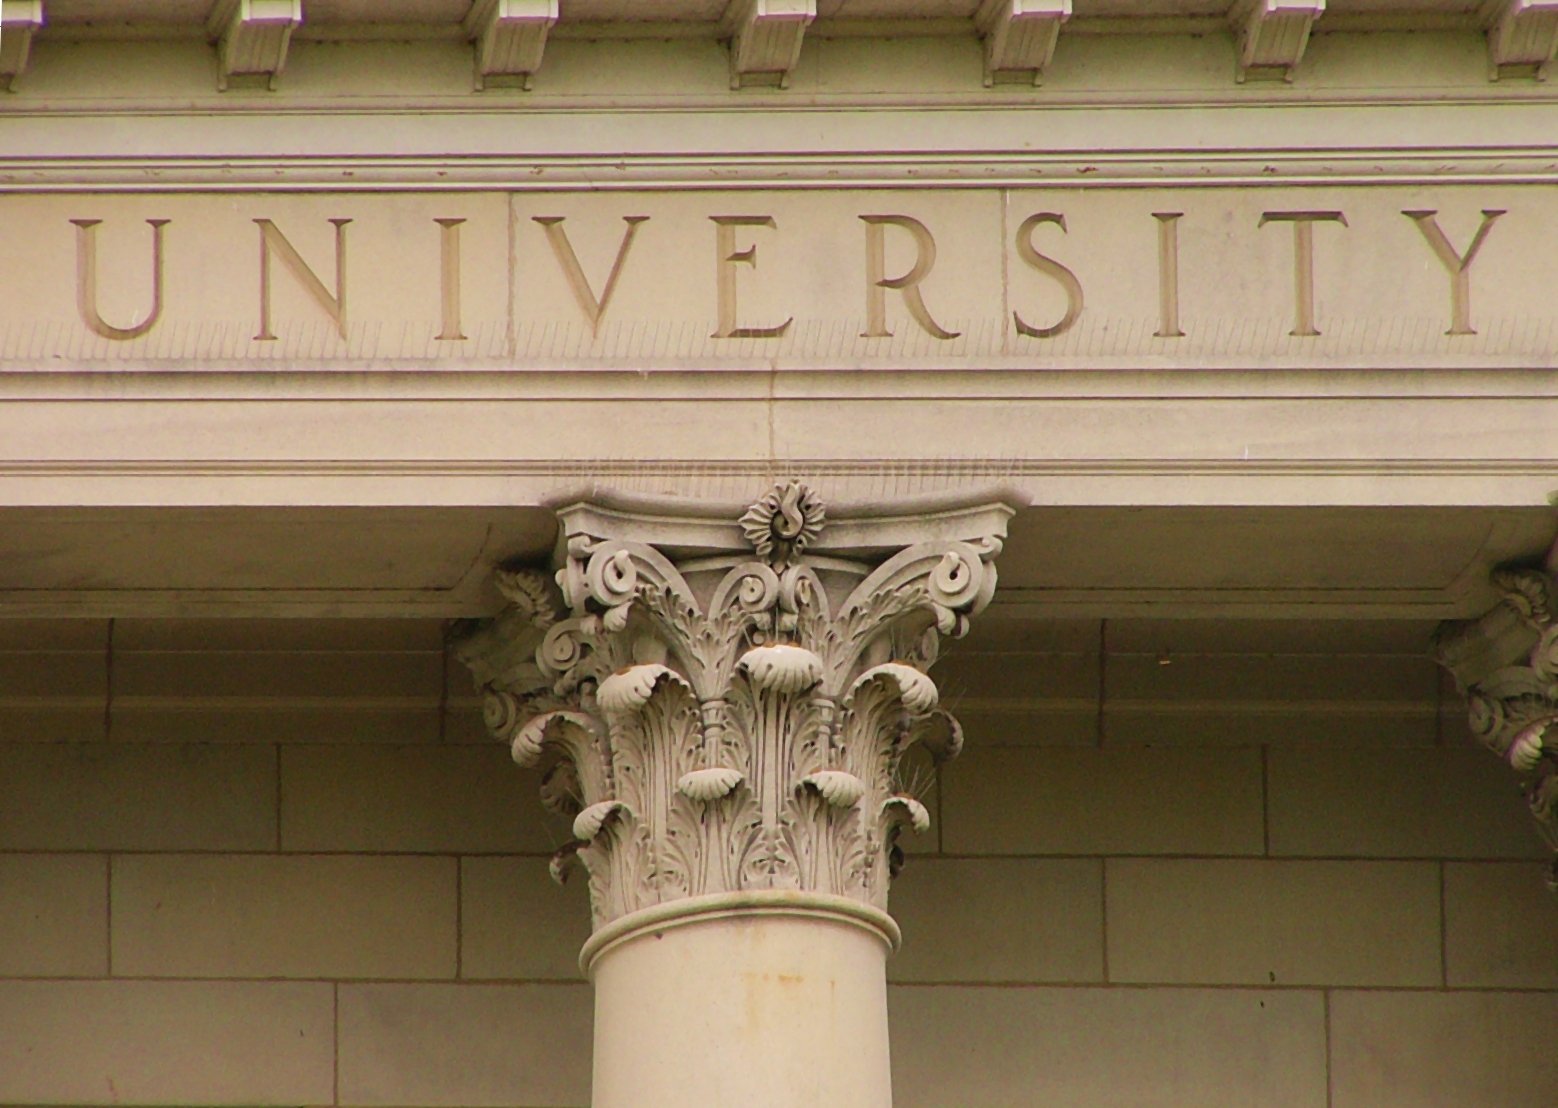 A university